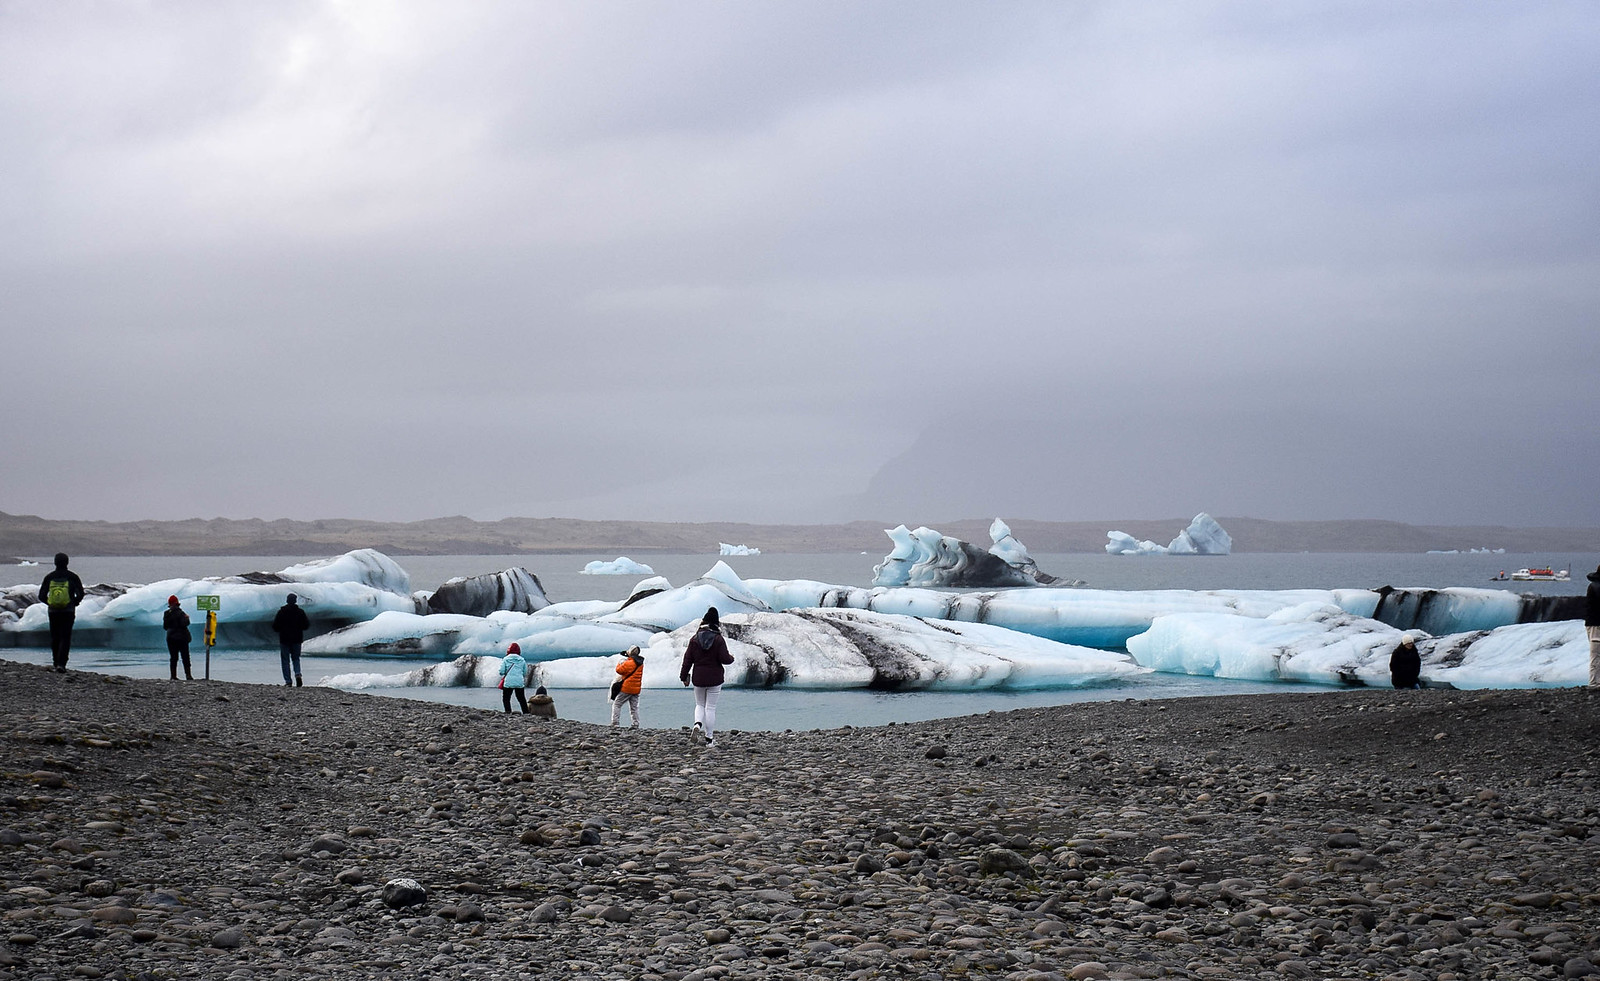 Glacier Lagoon in Iceland